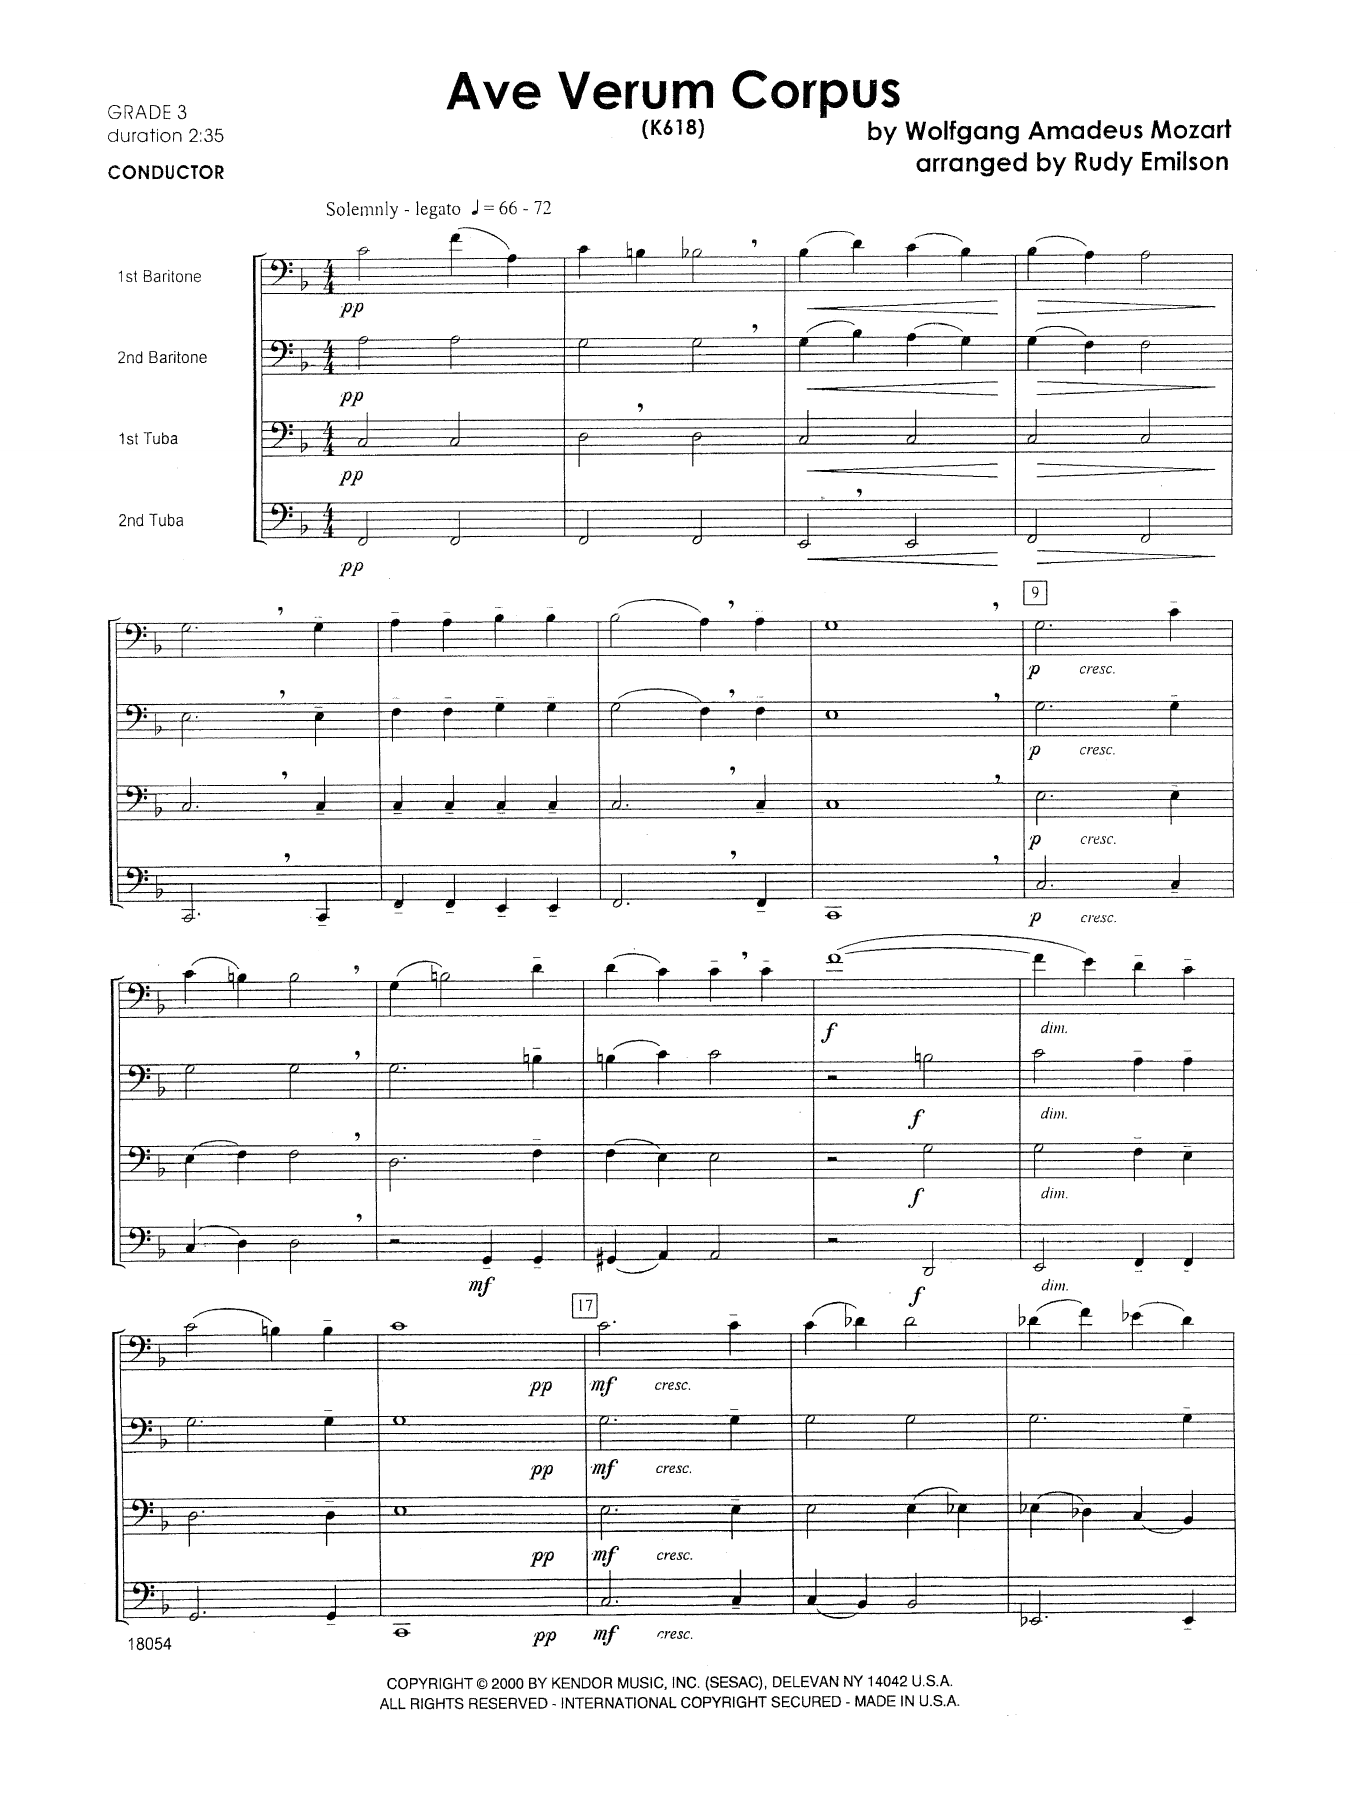 Download Emilson Ave Verum Corpus (K618) - Full Score Sheet Music